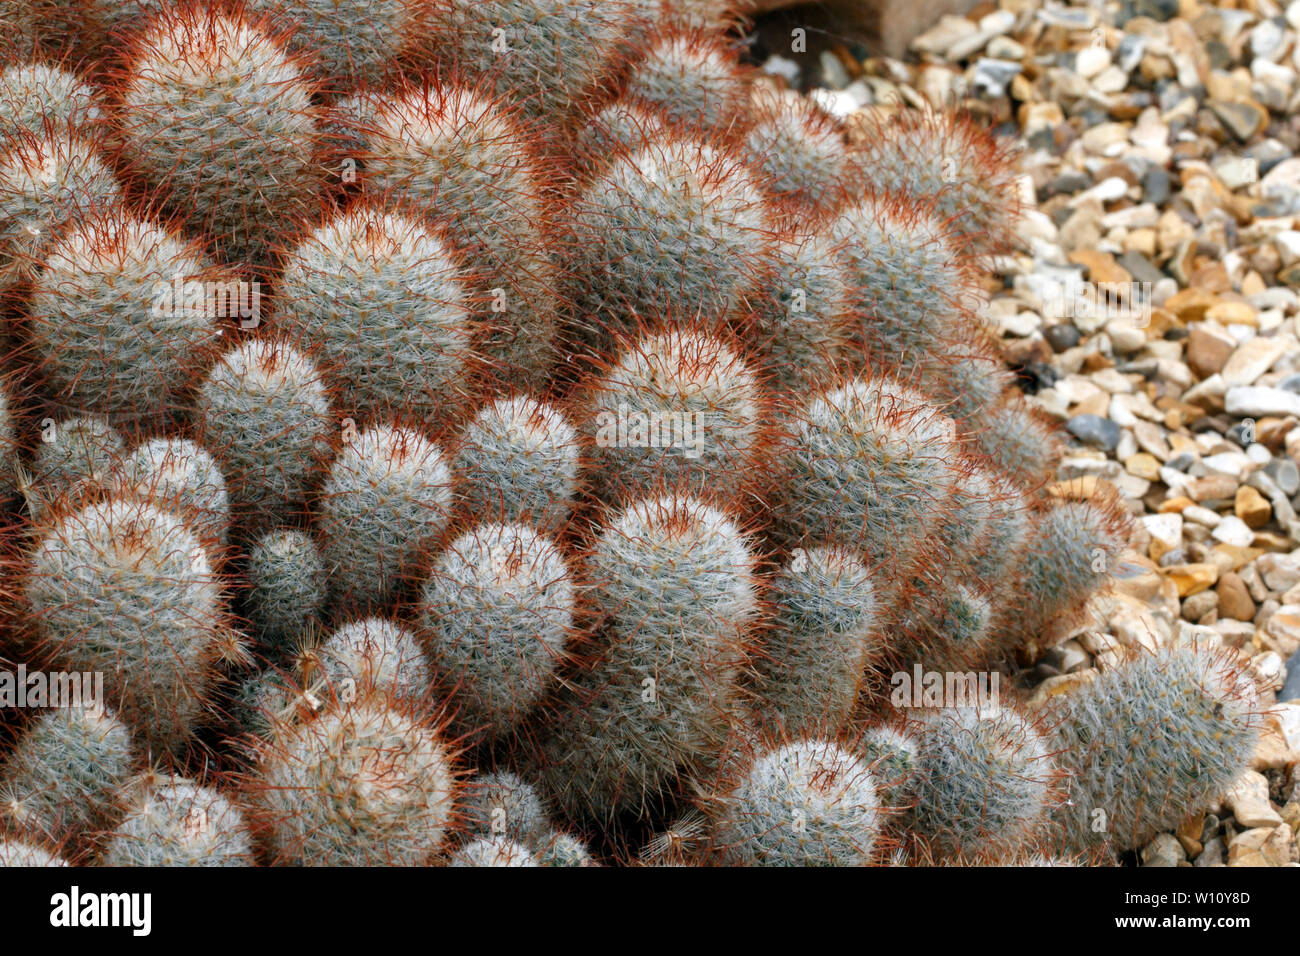 Mamillatria bombycima, cactus from Mexico seriously decimated in the wild. Stock Photo